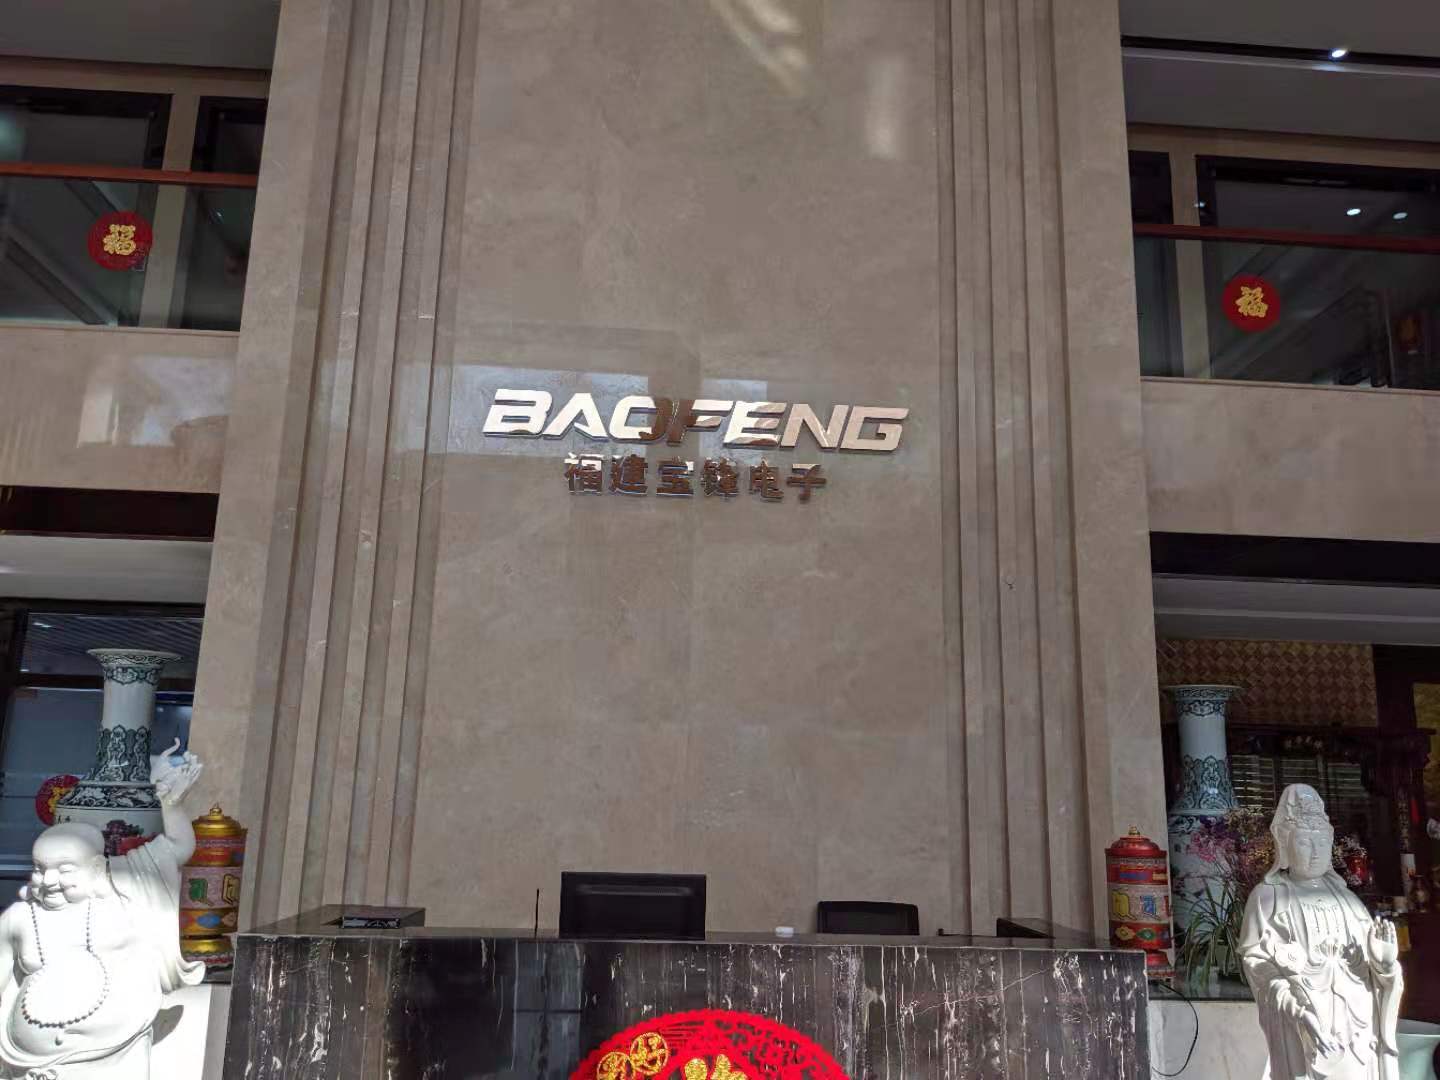 Visited Baofeng & TYT in Nov